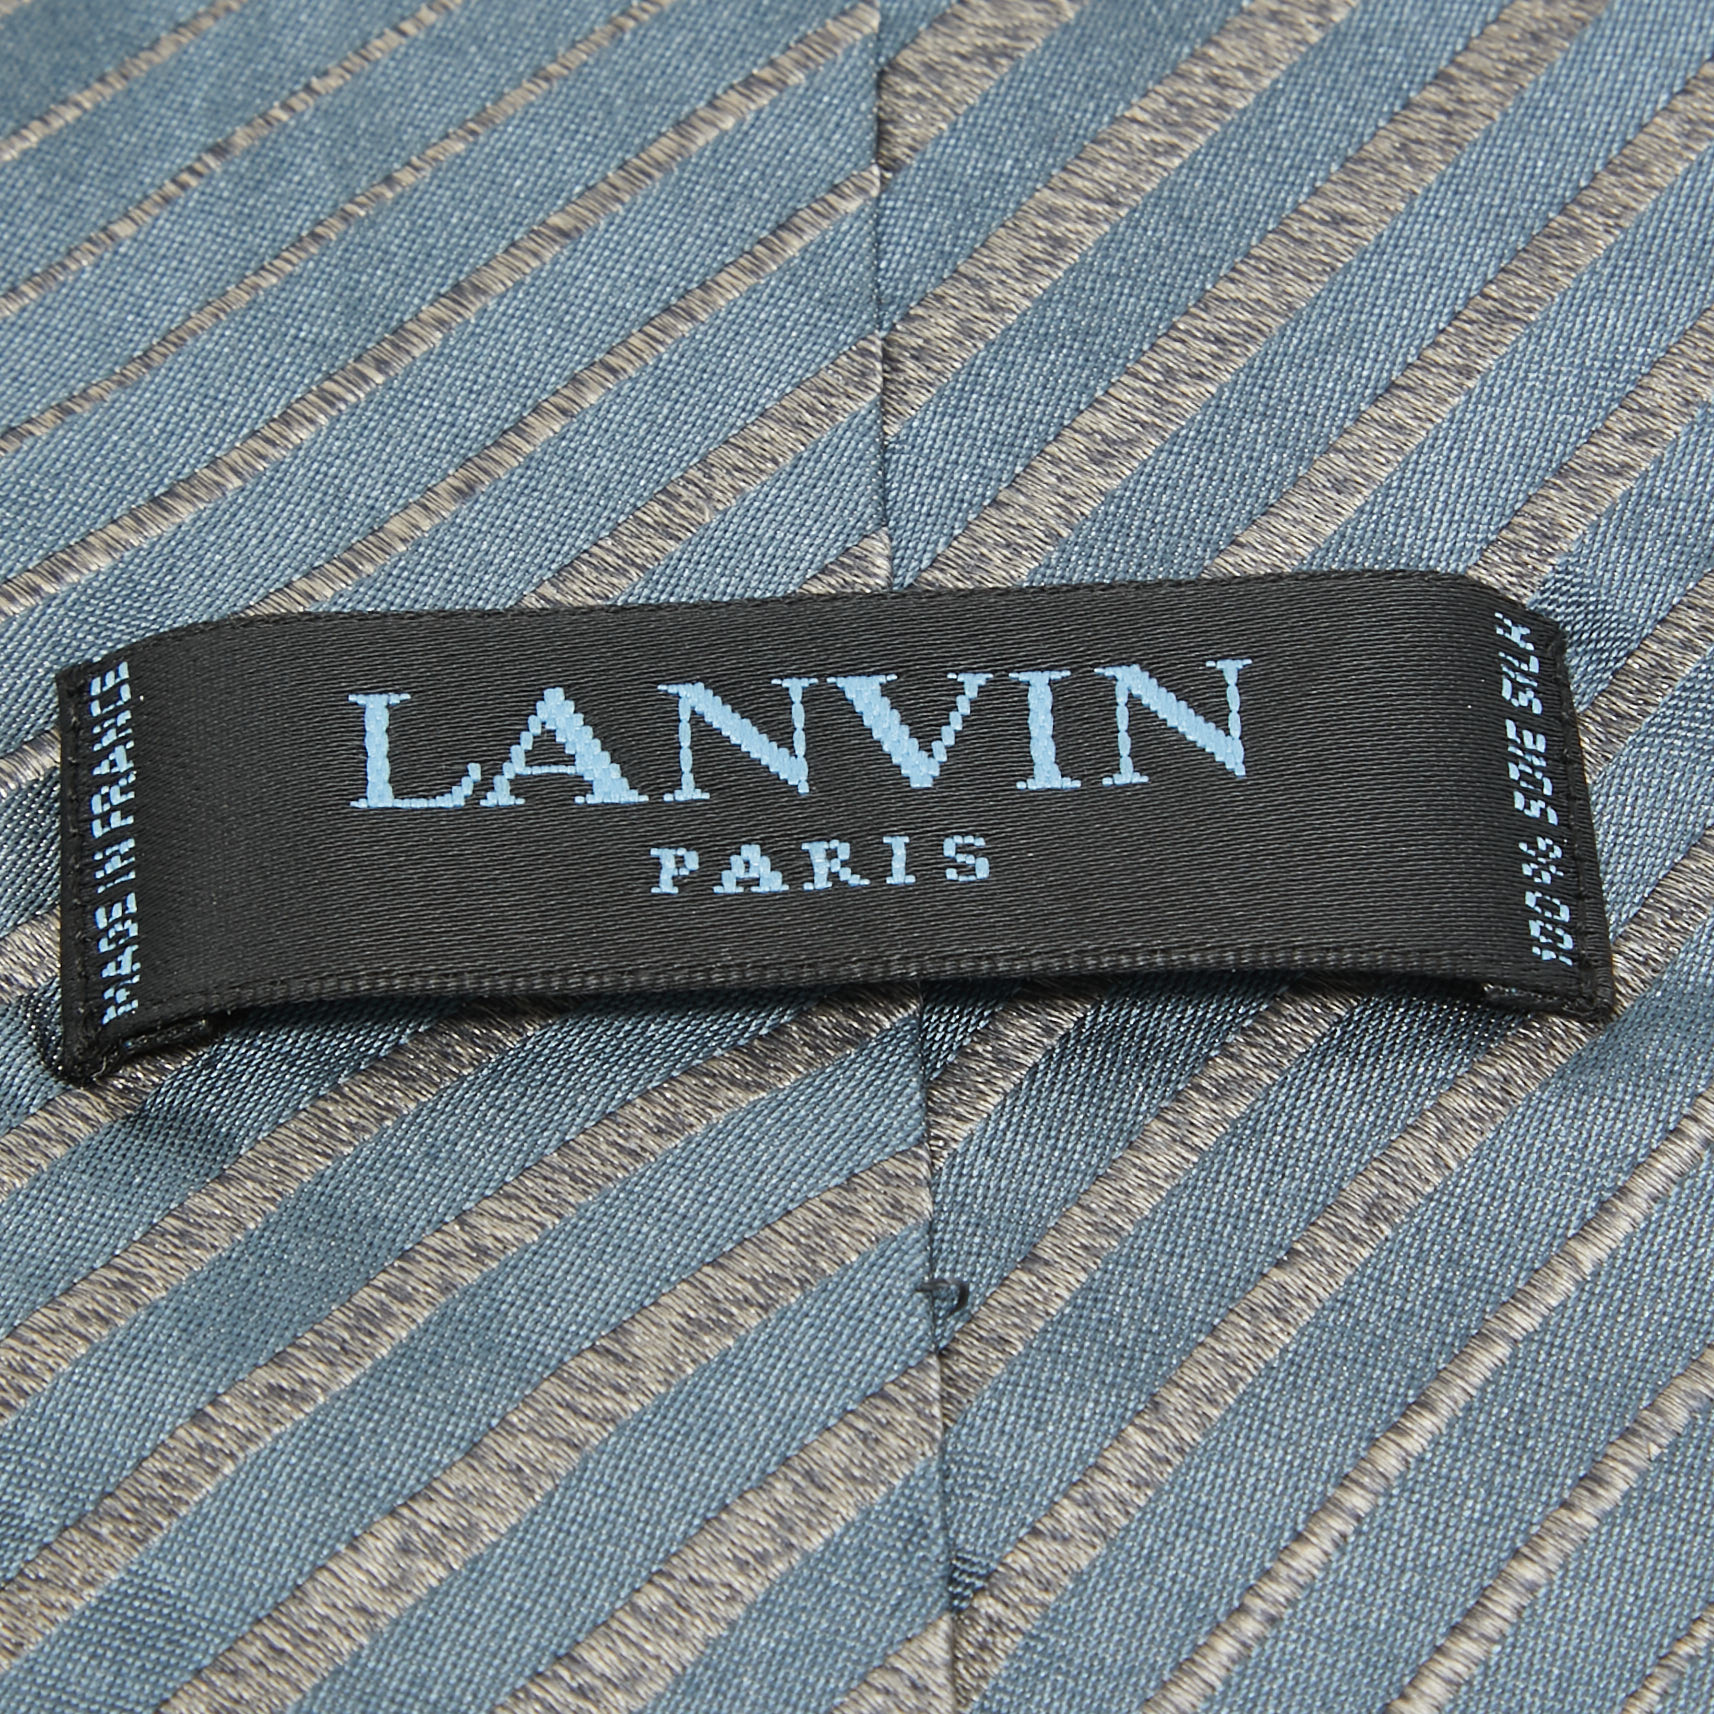 Lanvin Blue Striped Silk Traditional Tie